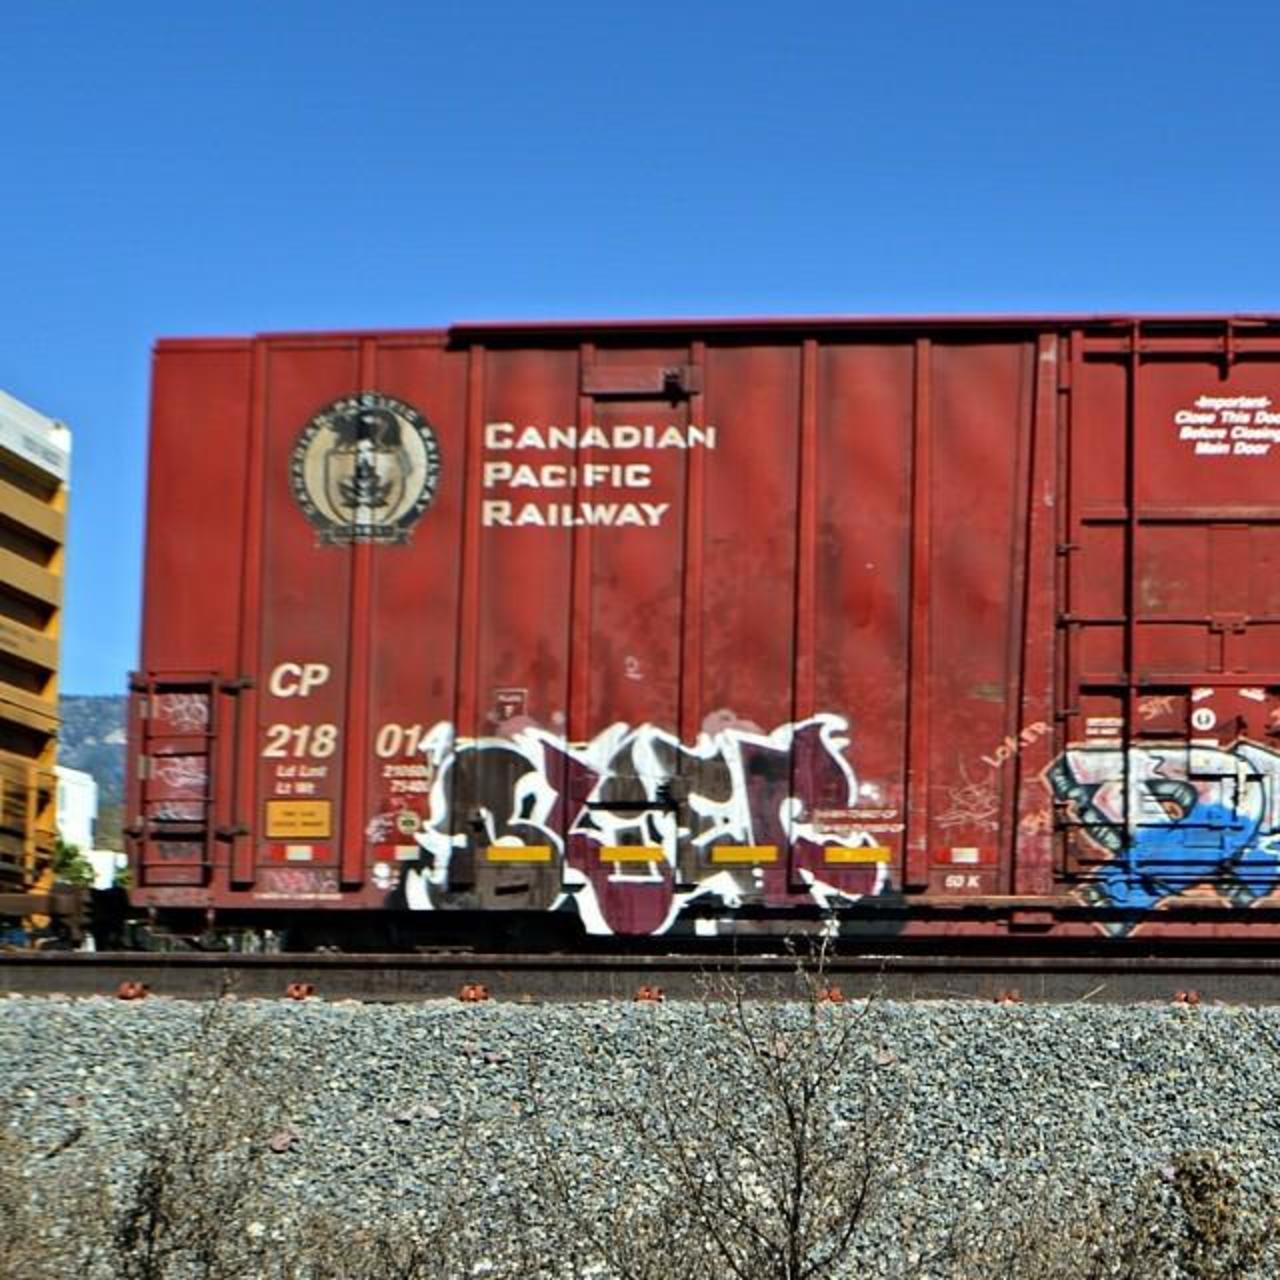 #graffpics #graffiti #BLIEF #benching #trains #freights #boxcar #art #paint #spraypaint #graff #graffiti #yepyep by… http://t.co/uw11H41xvn